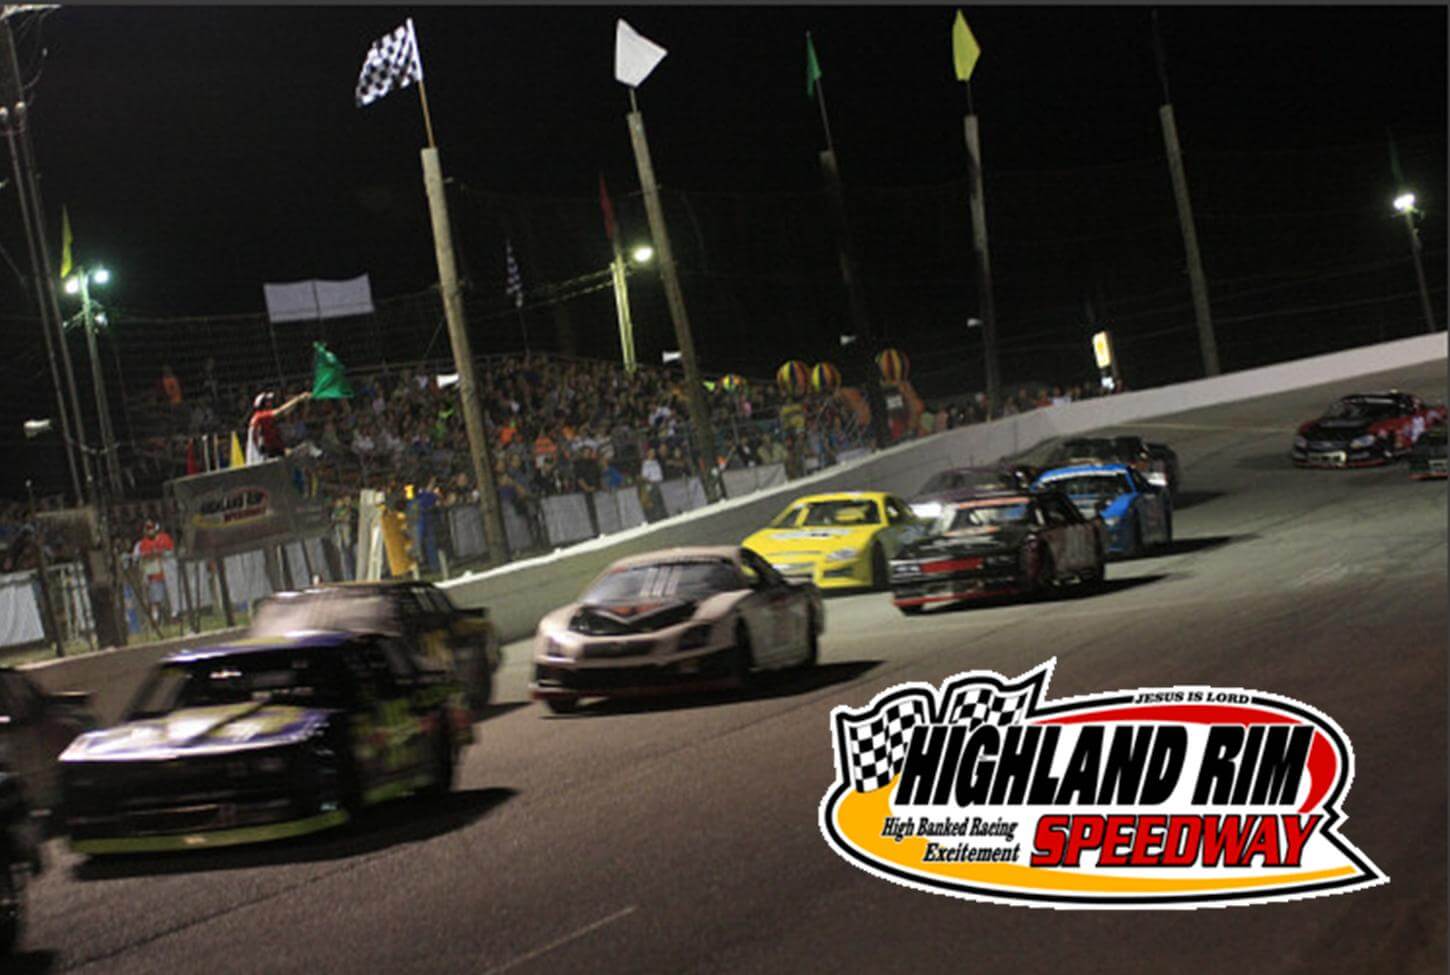 VIDEO: Highland Rim Speedway Grand Opening